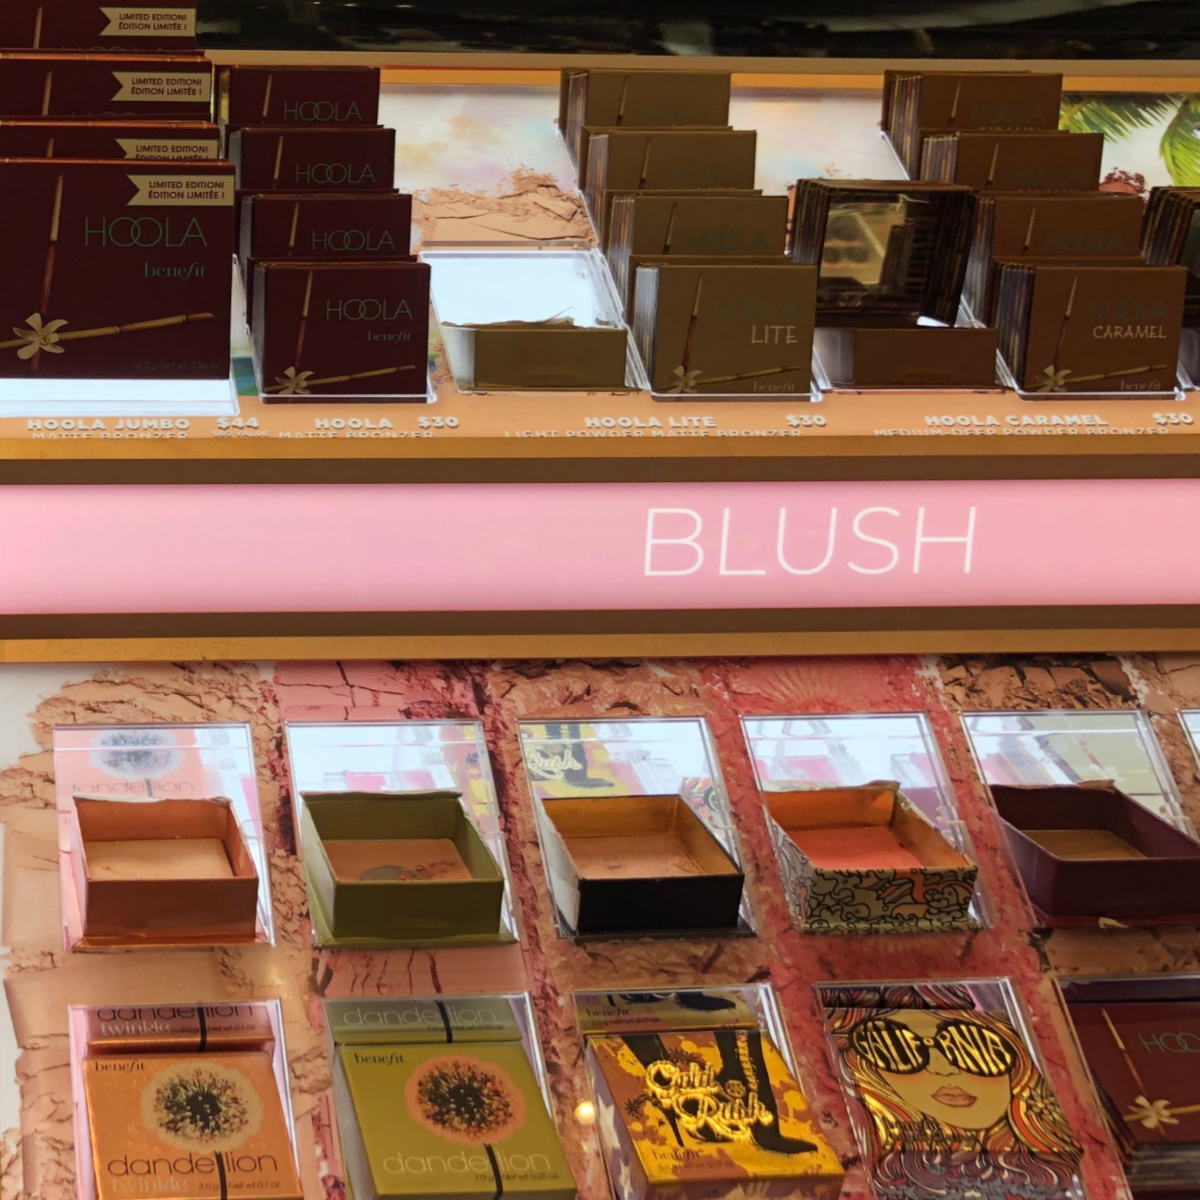 blush aisle sephora benefit cosmetics makeup aisle products store